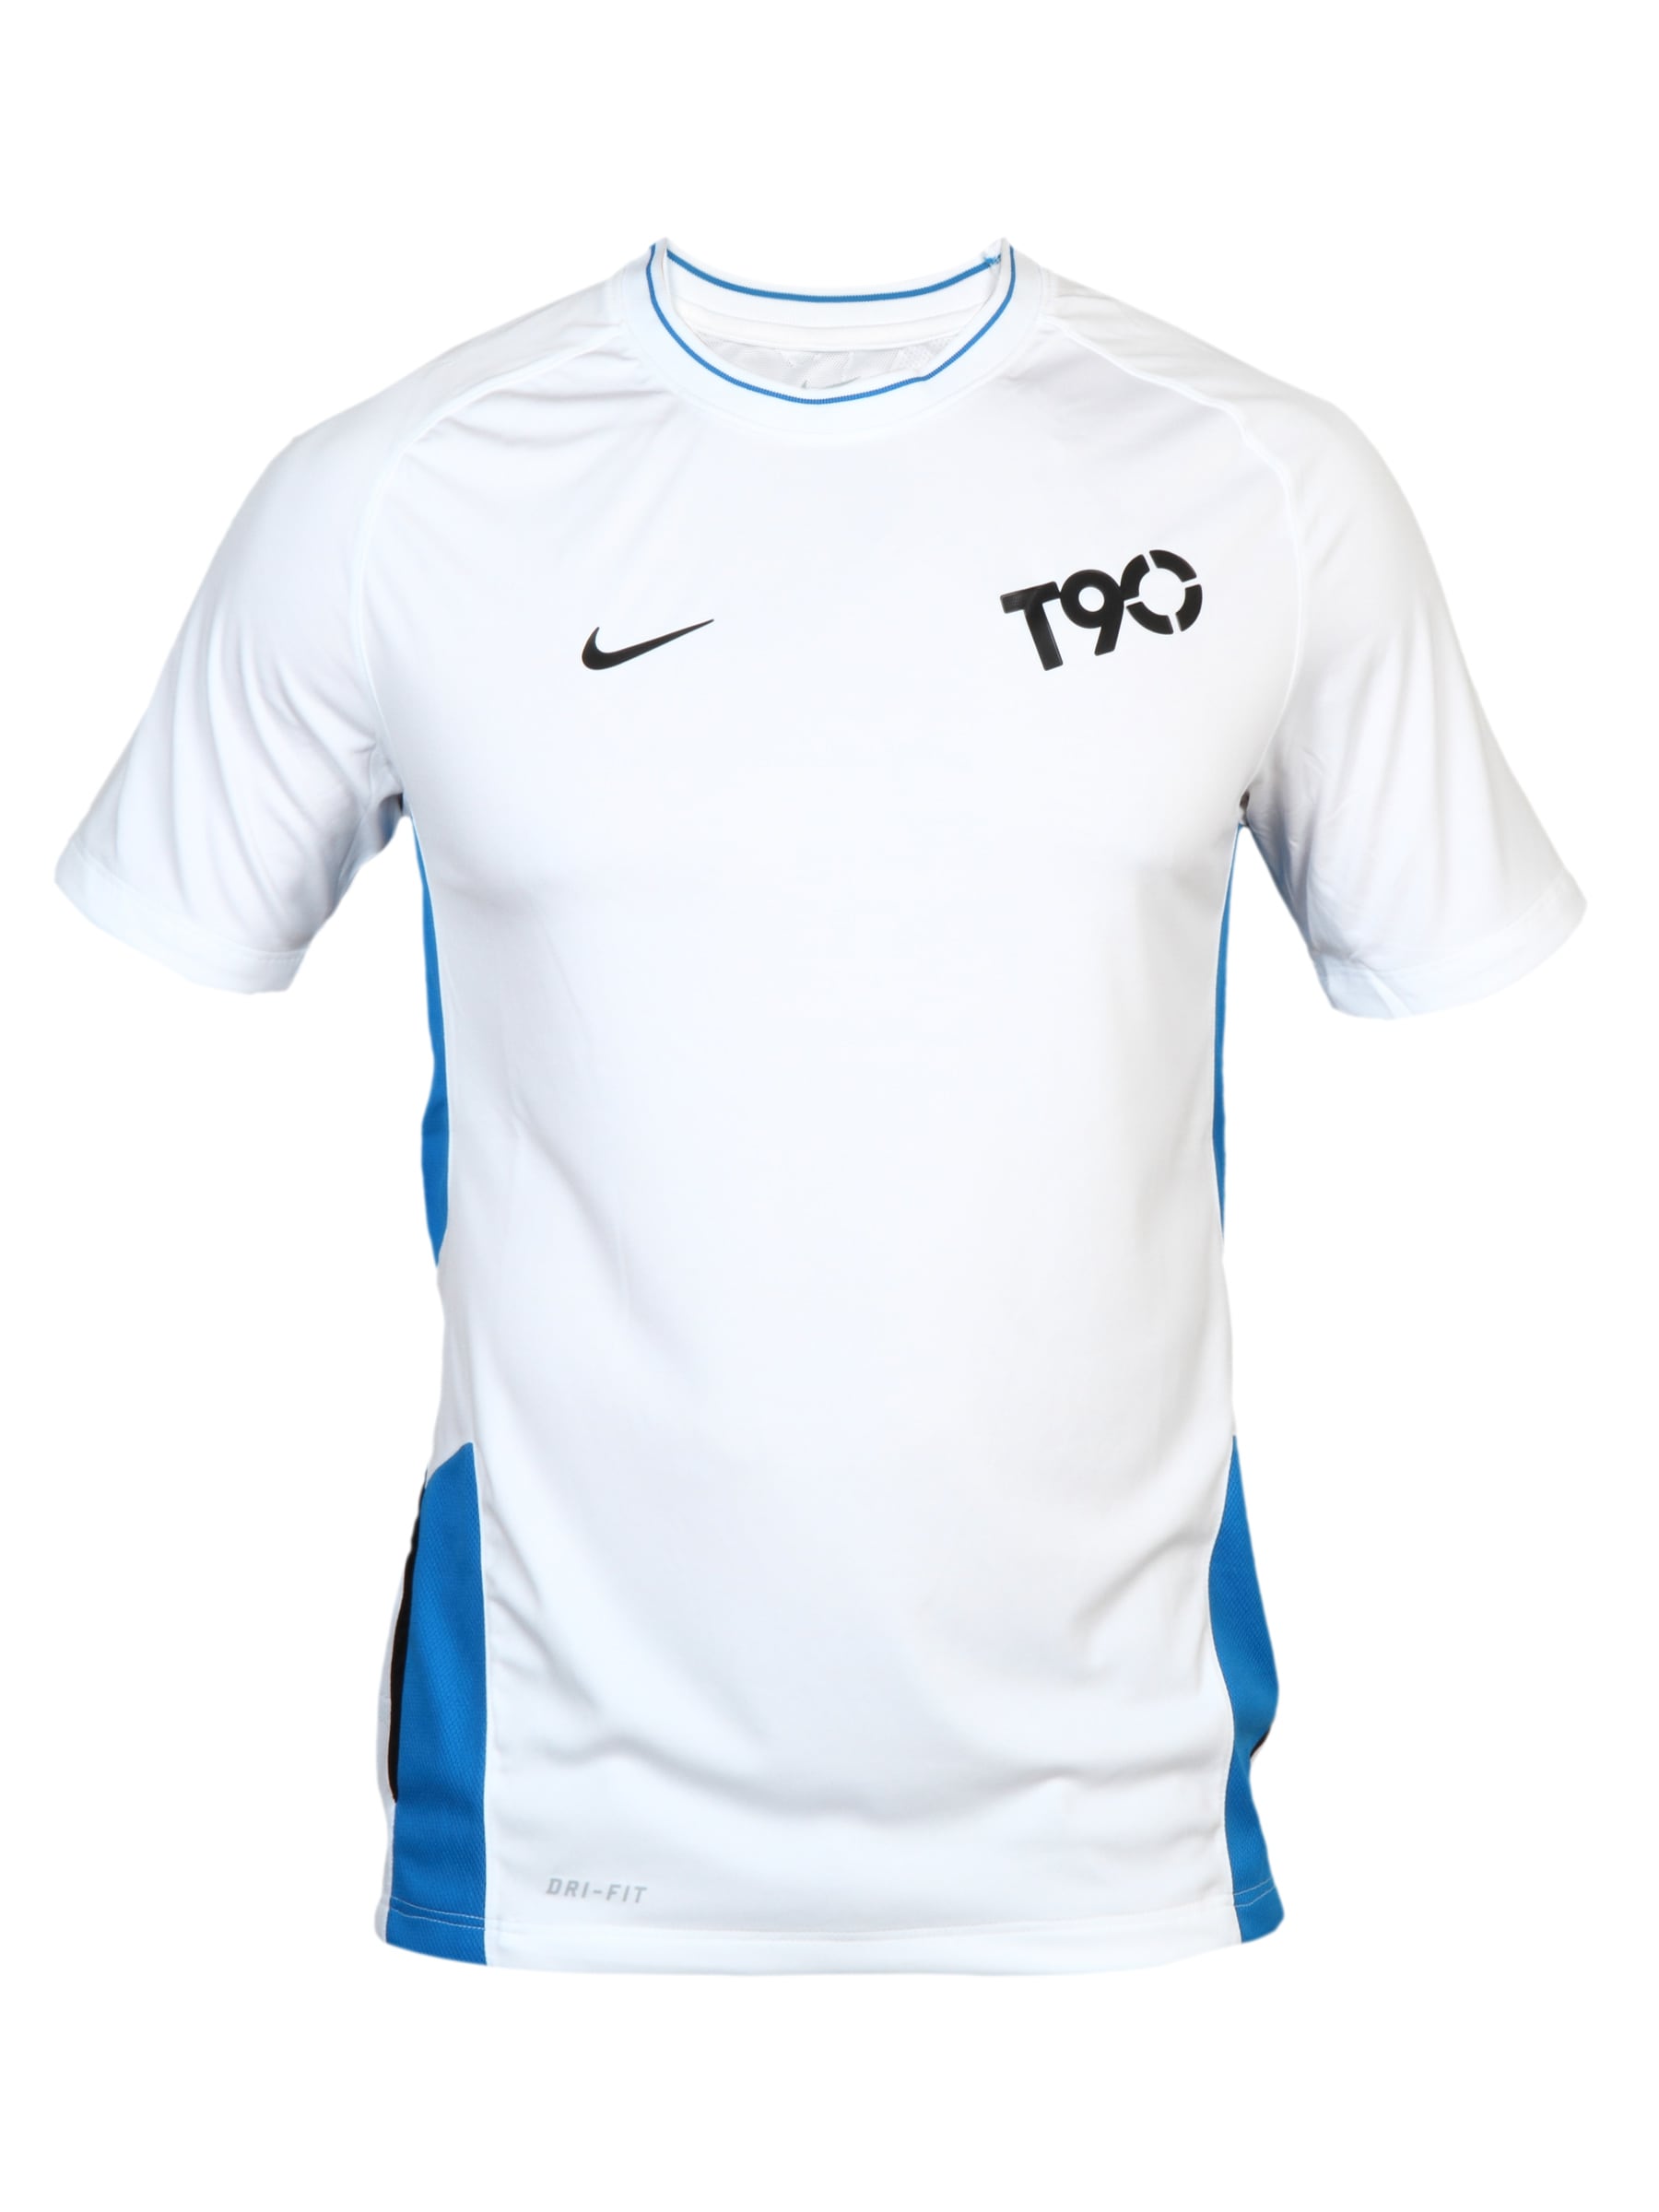 Nike Men's T90 Ss White T-shirt